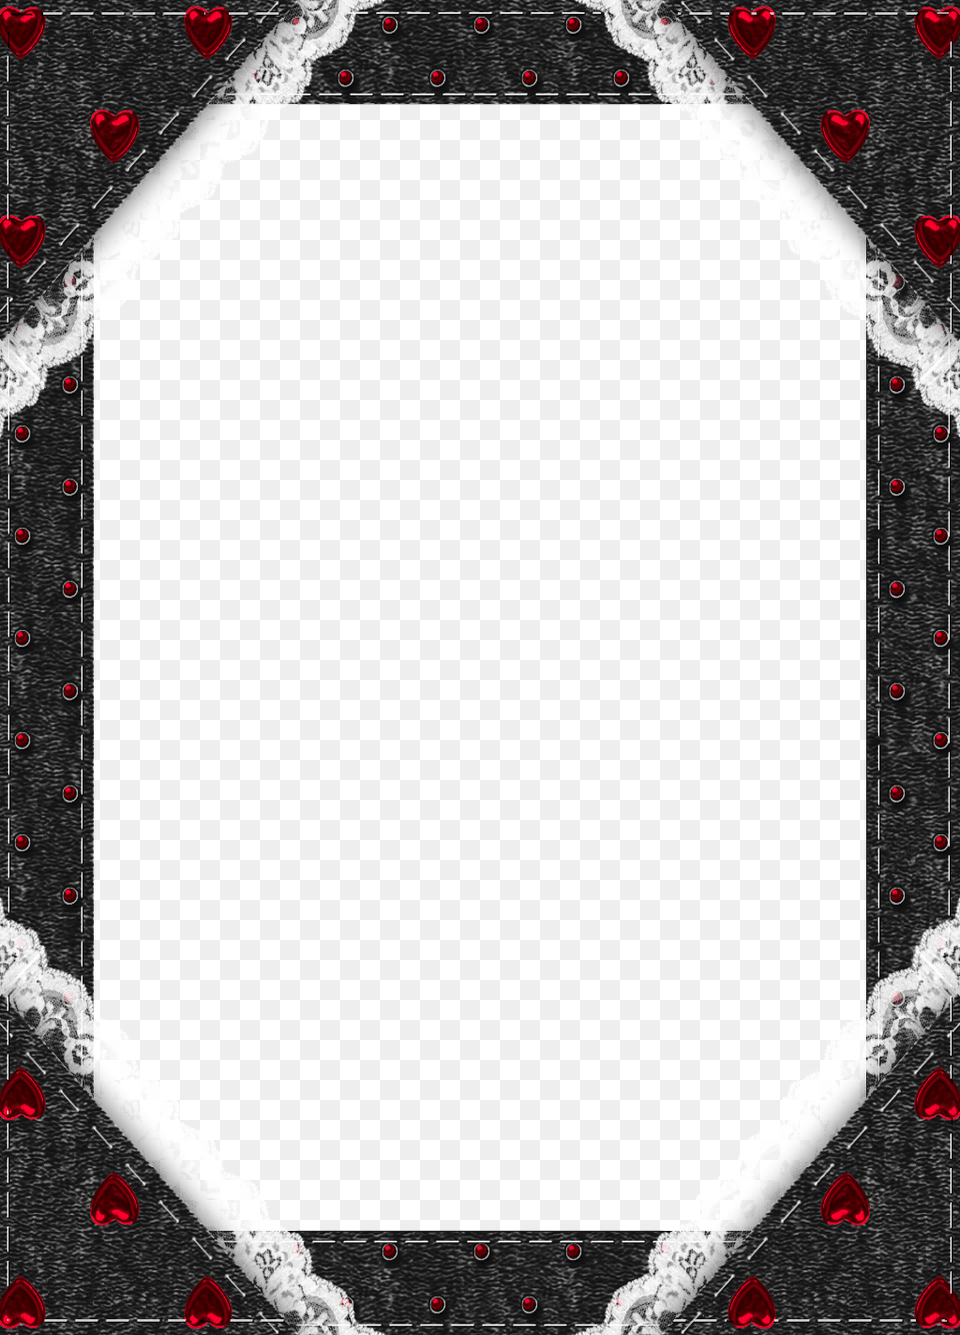 Black Transparent Frame With Red Hearts Halloween Frames Red And Black Frame Transparent, Mirror, Blackboard Png